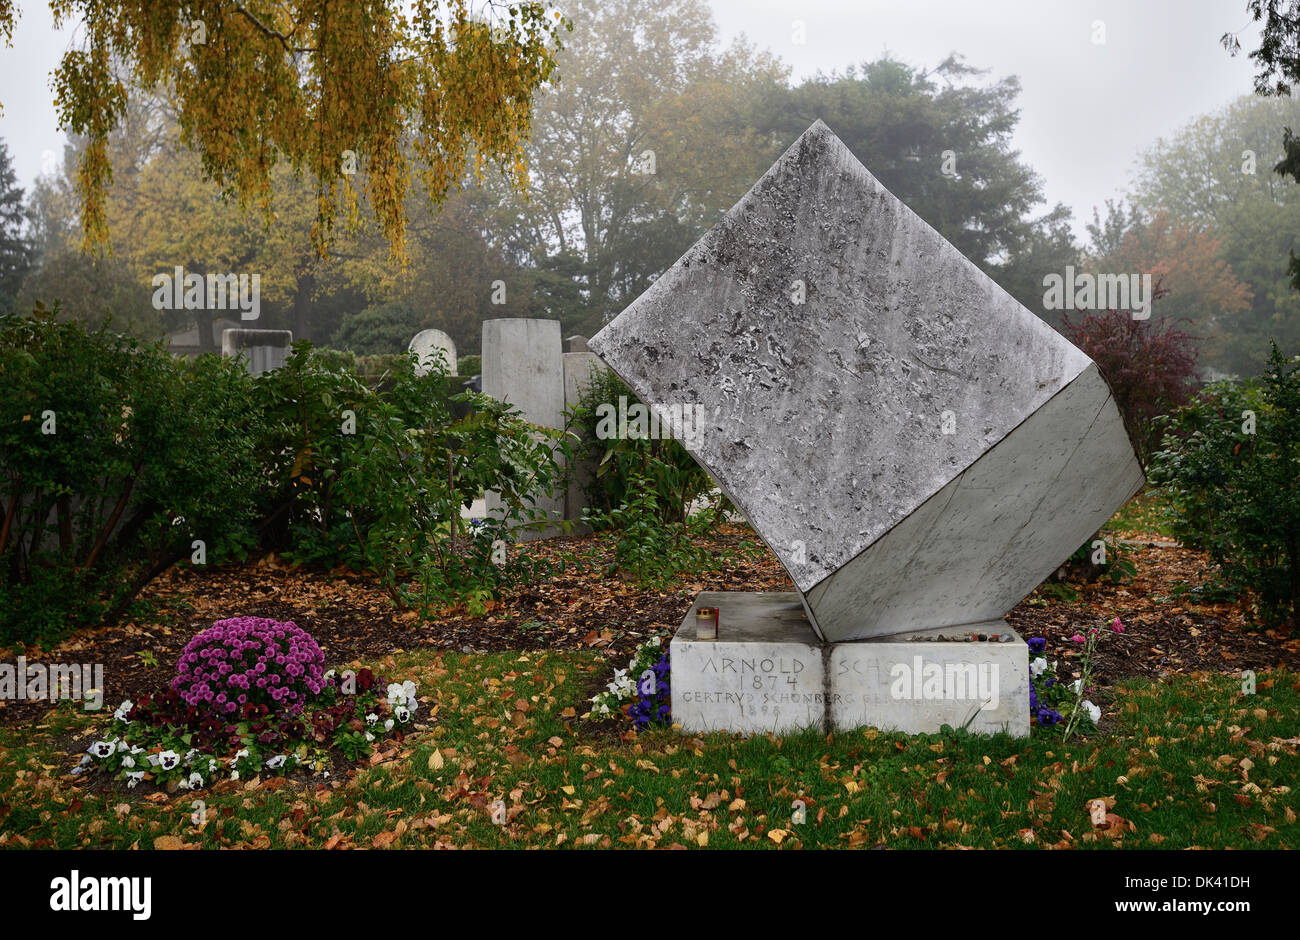 Grave of Arnold Schoenberg, composer, Zentralfriedhof, Central Cemetery, Vienna, Austria, Europe Stock Photo